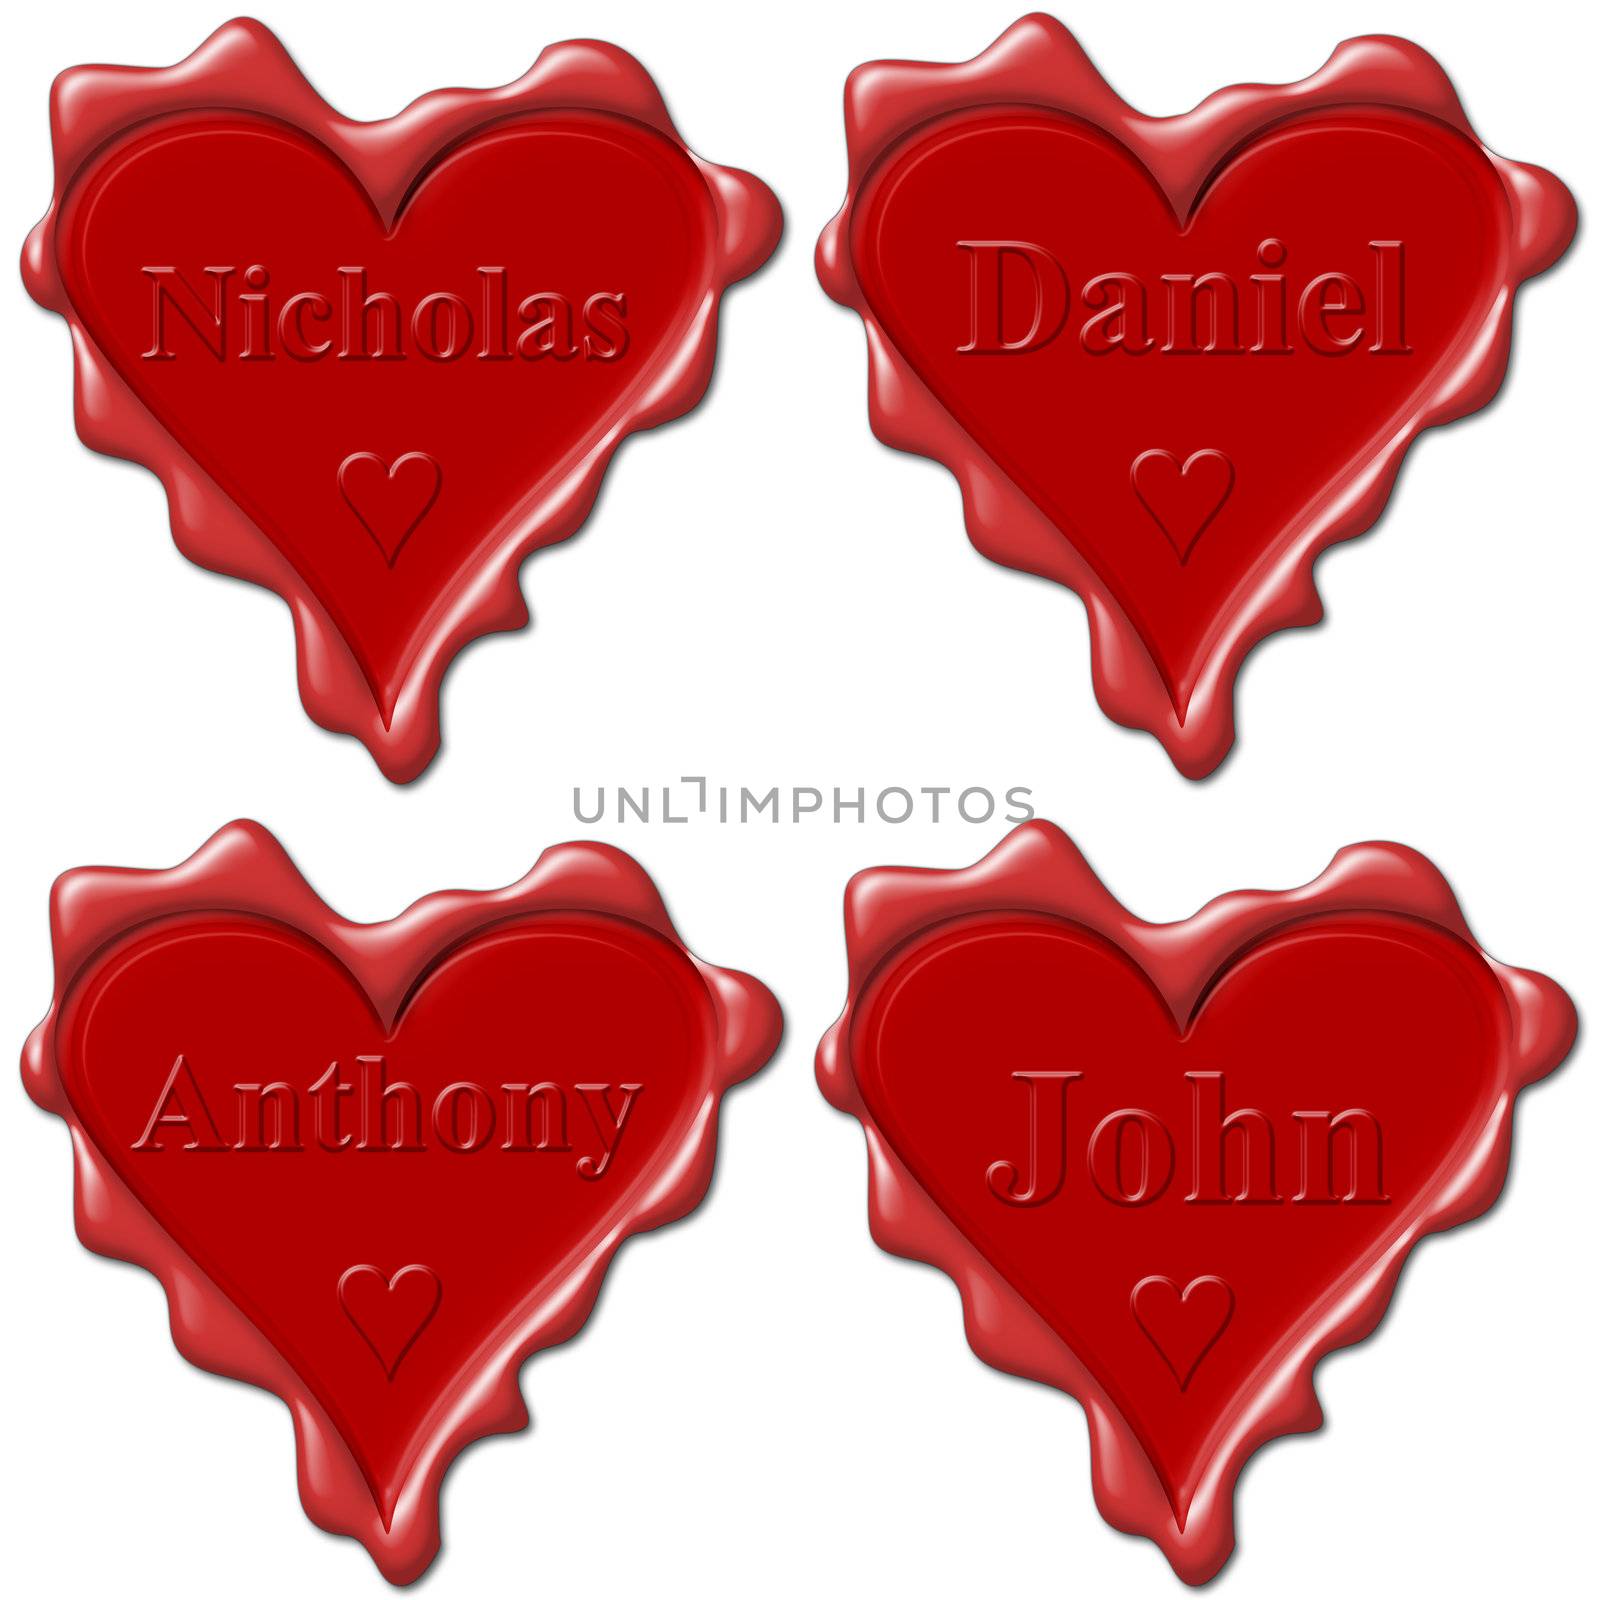 Valentine love hearts with names: Nicholas, Daniel, Anthony, John